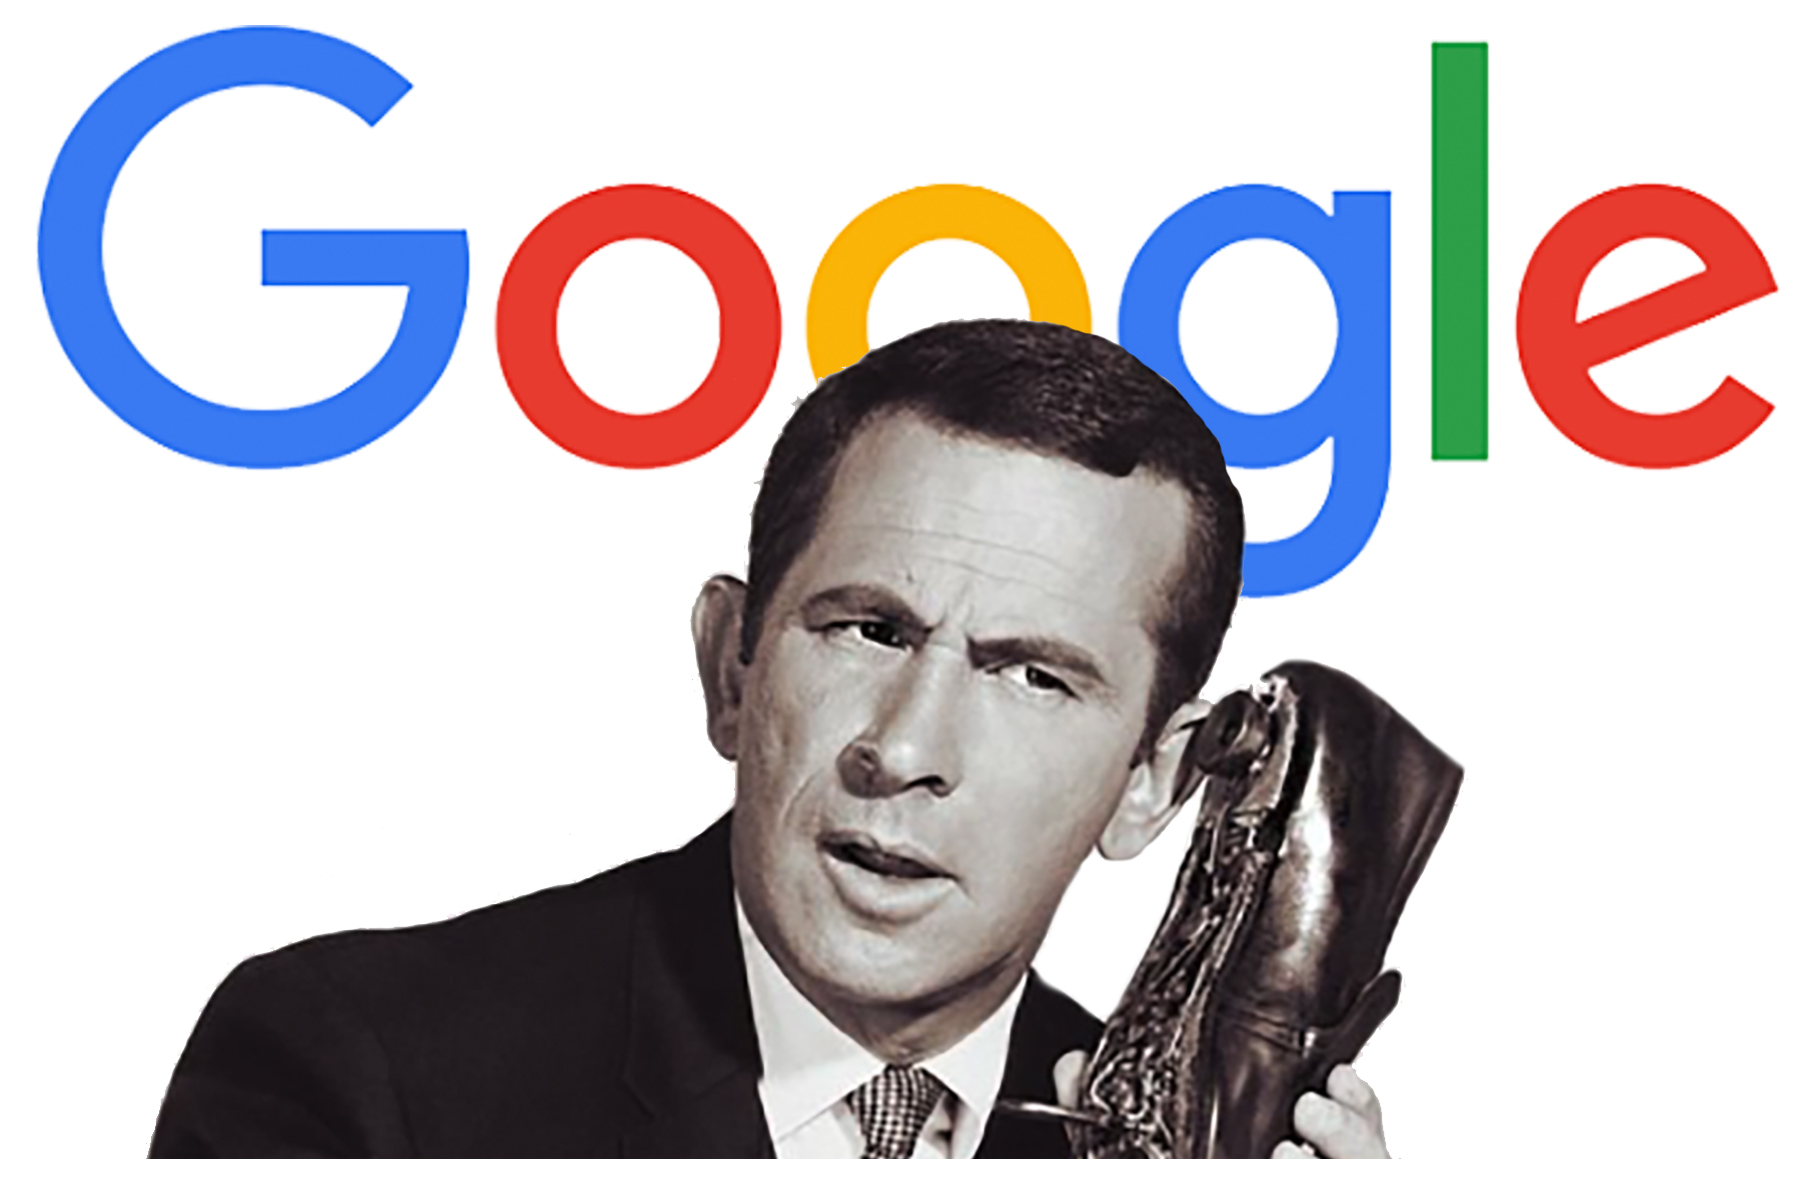 Google Smart: PM’s Weekly “Google-Hack” Column